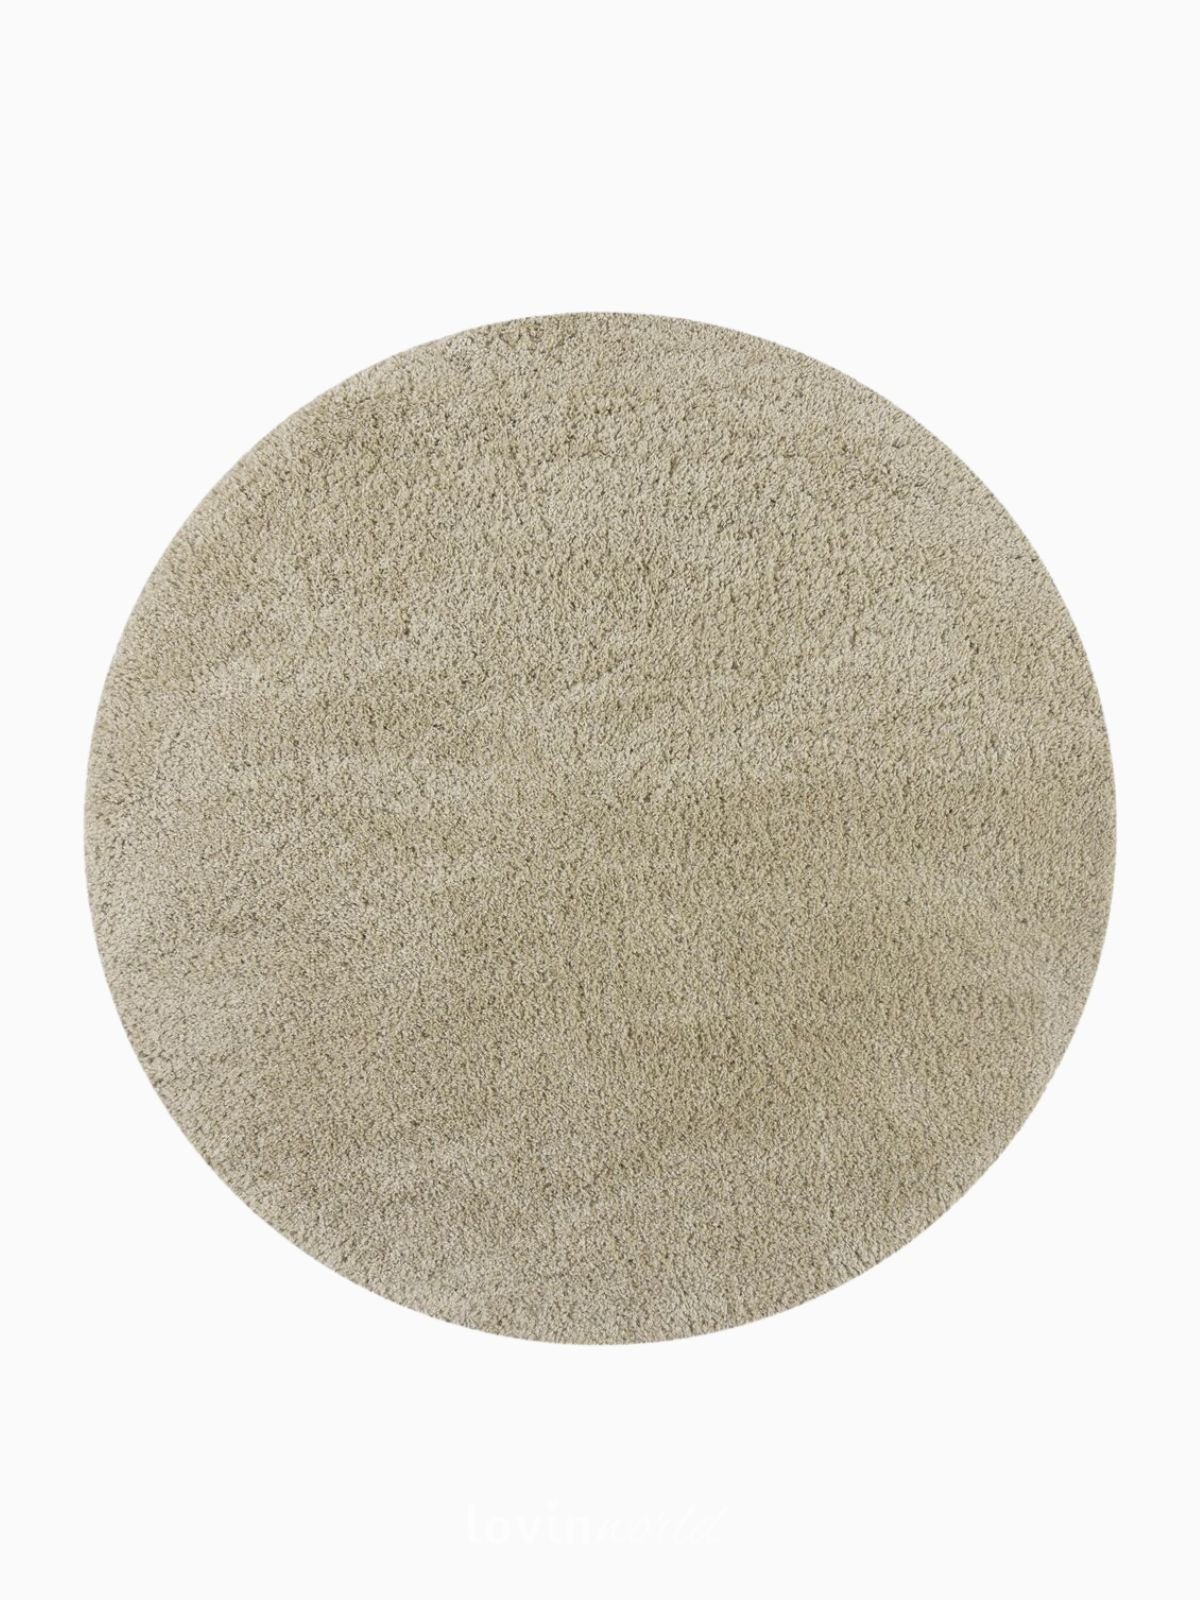 Tappeto rotondo shaggy Feather Soft in polipropilene, colore naturale 133x133 cm.-1